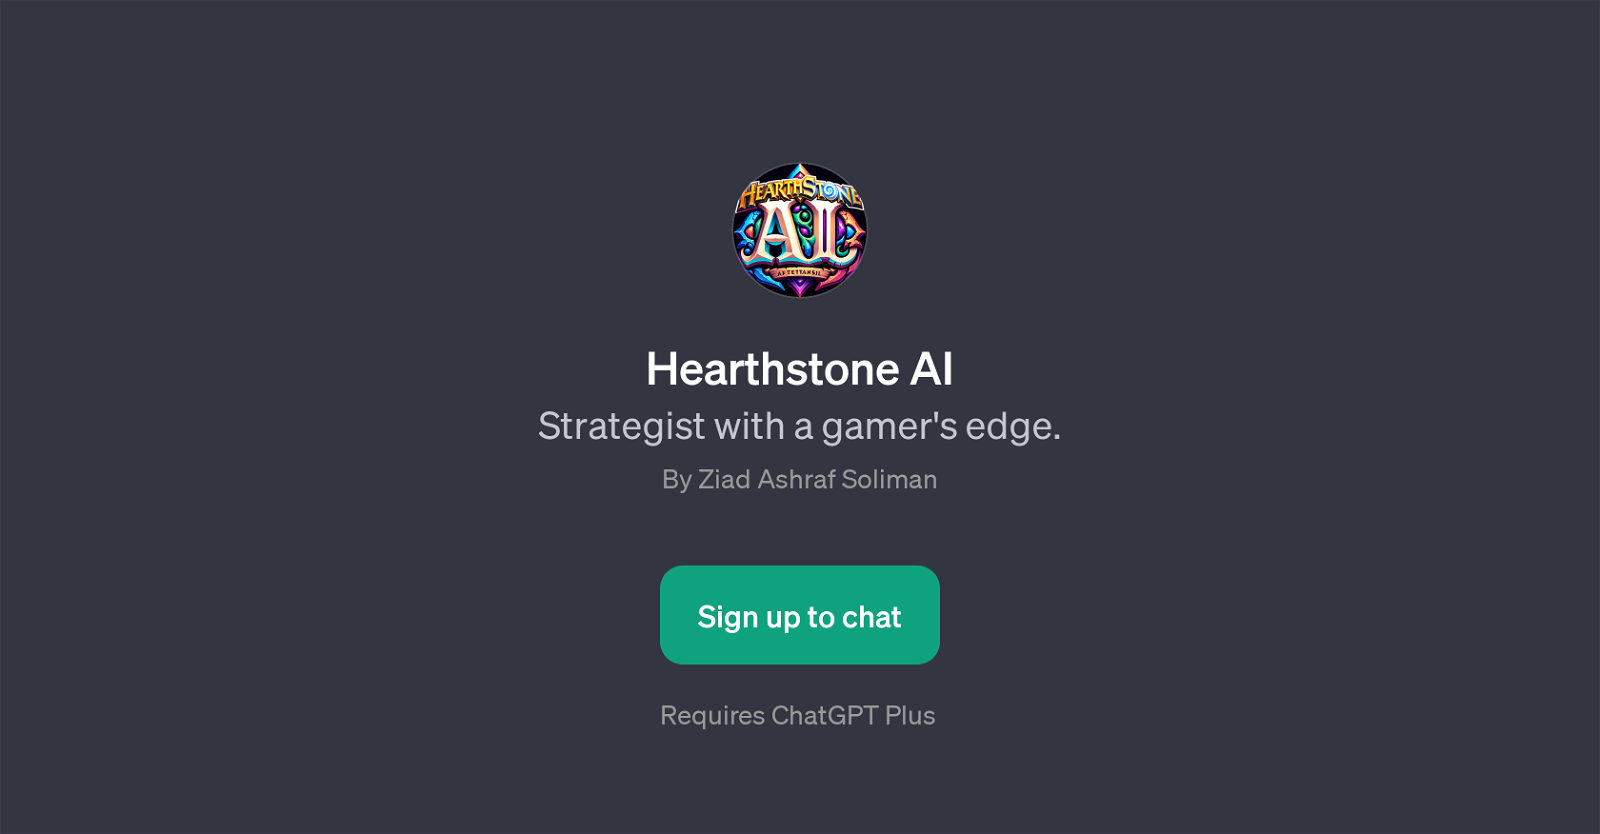 Hearthstone AI website